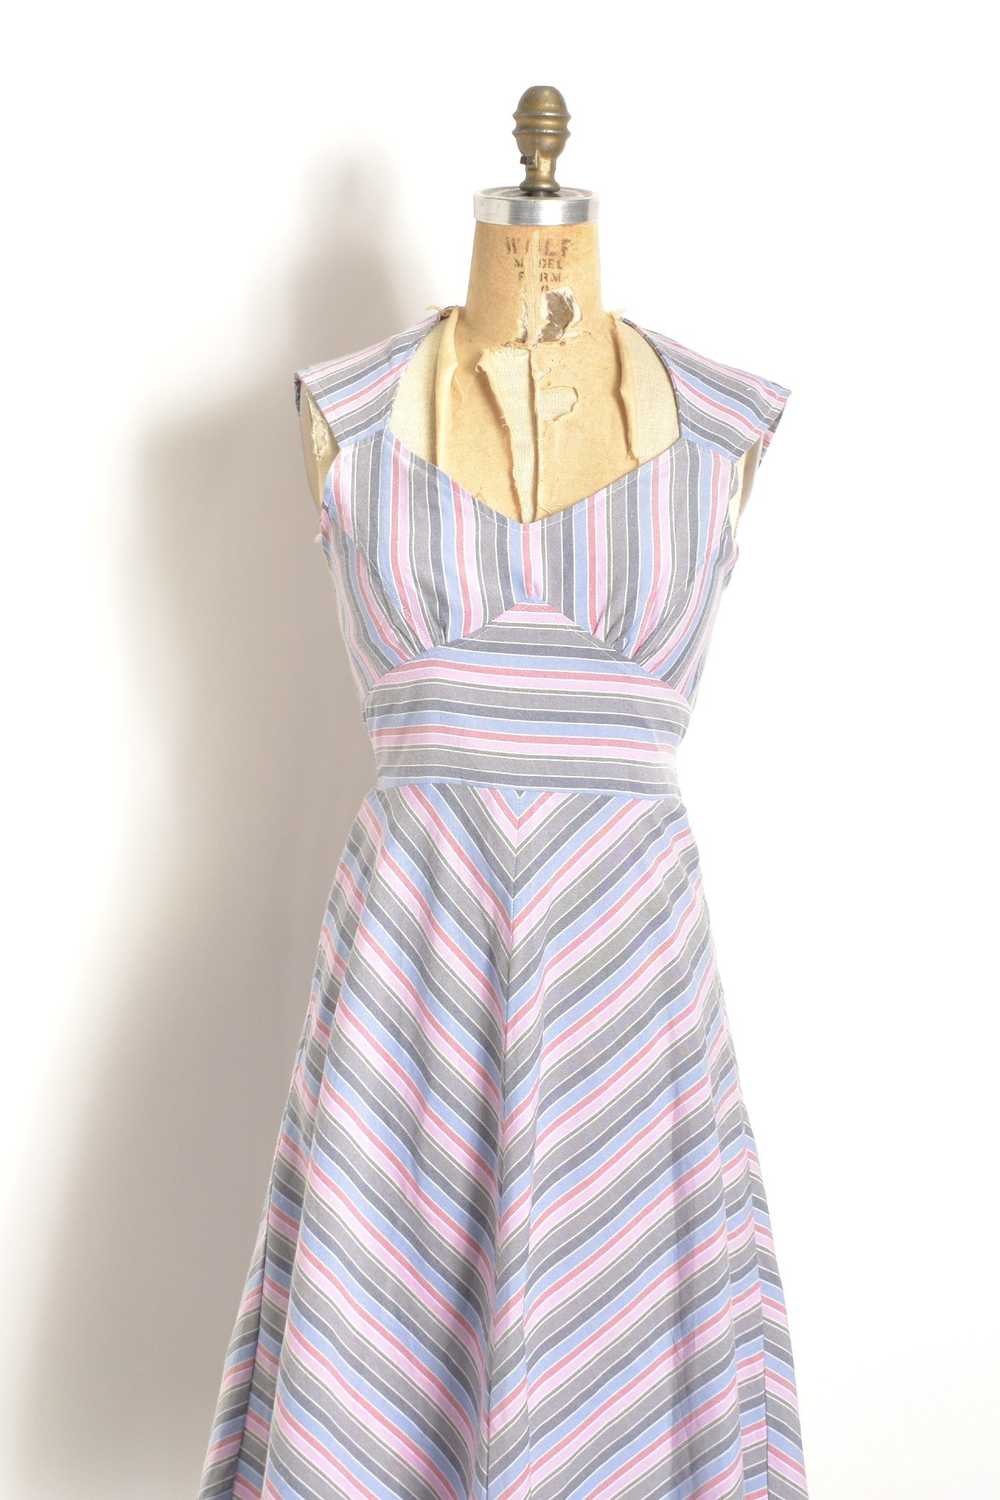 1970s Striped Hooded Dress-medium - image 9